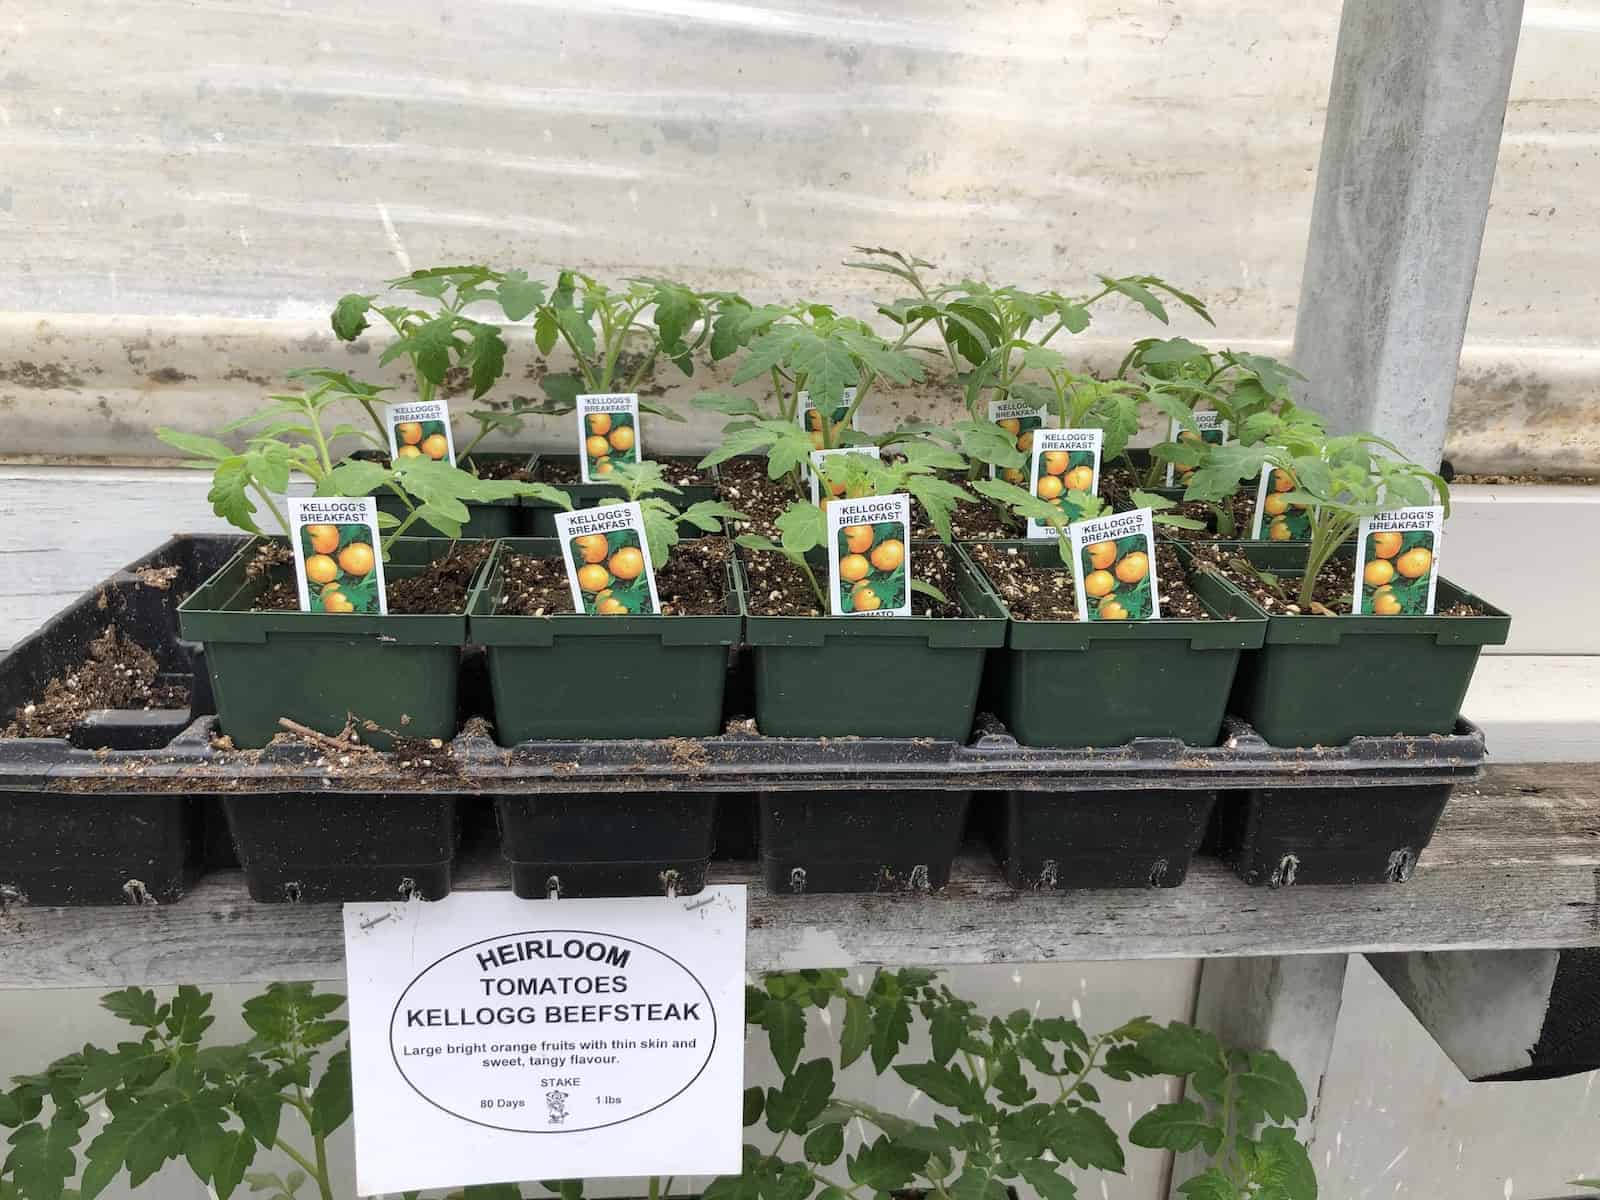 kellogg's breakfast tomato plants - seedling plants at nursery